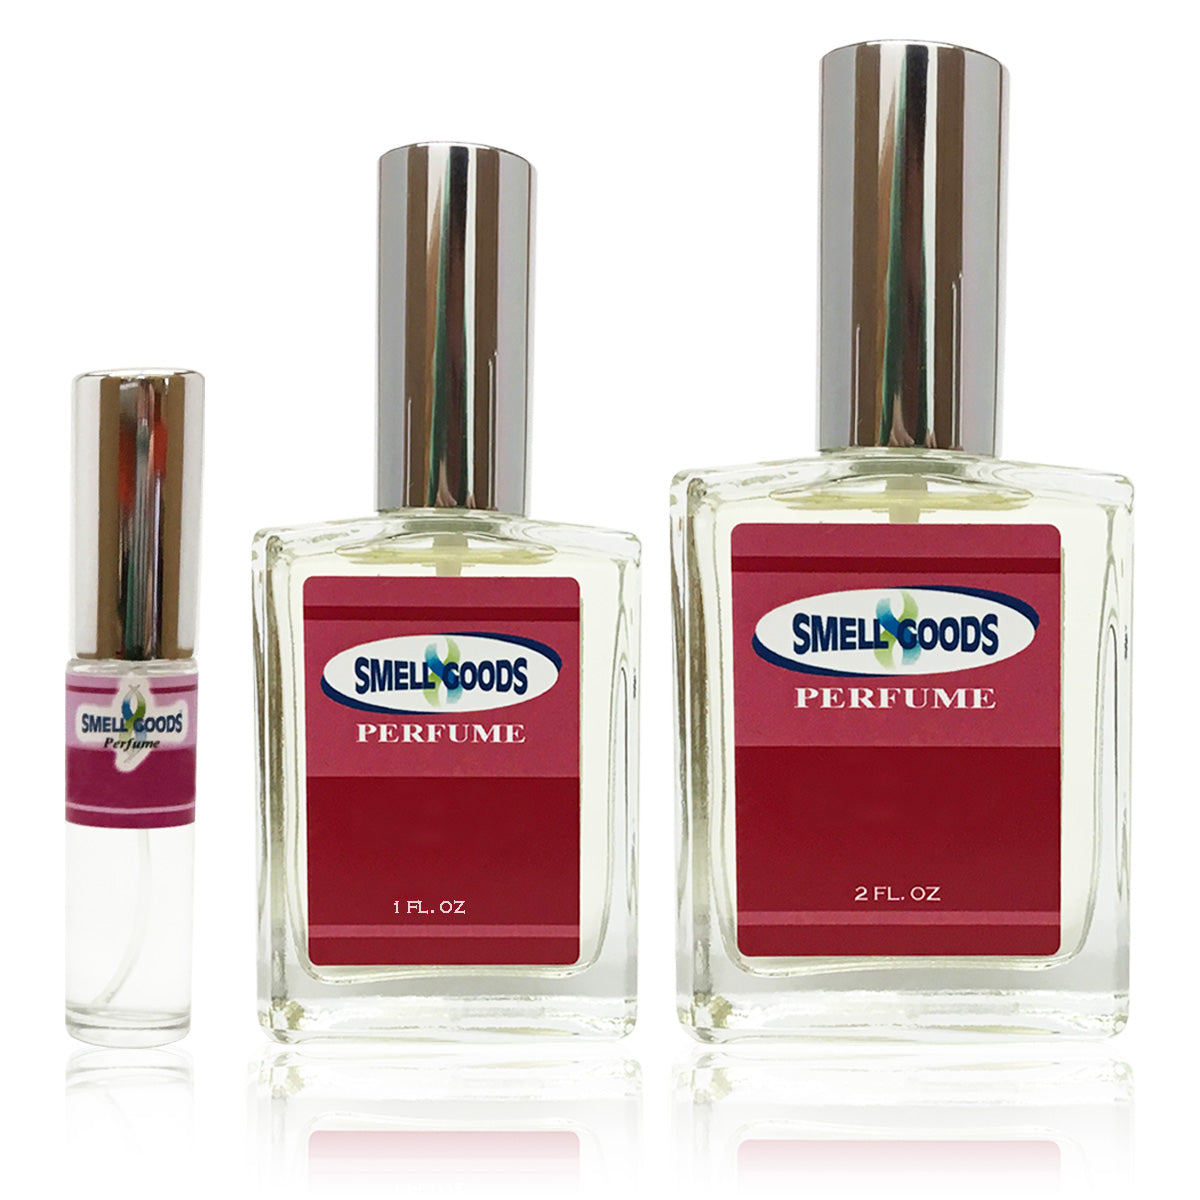 Chanel #5 Type (Women) Perfume Spray – Smell Goods